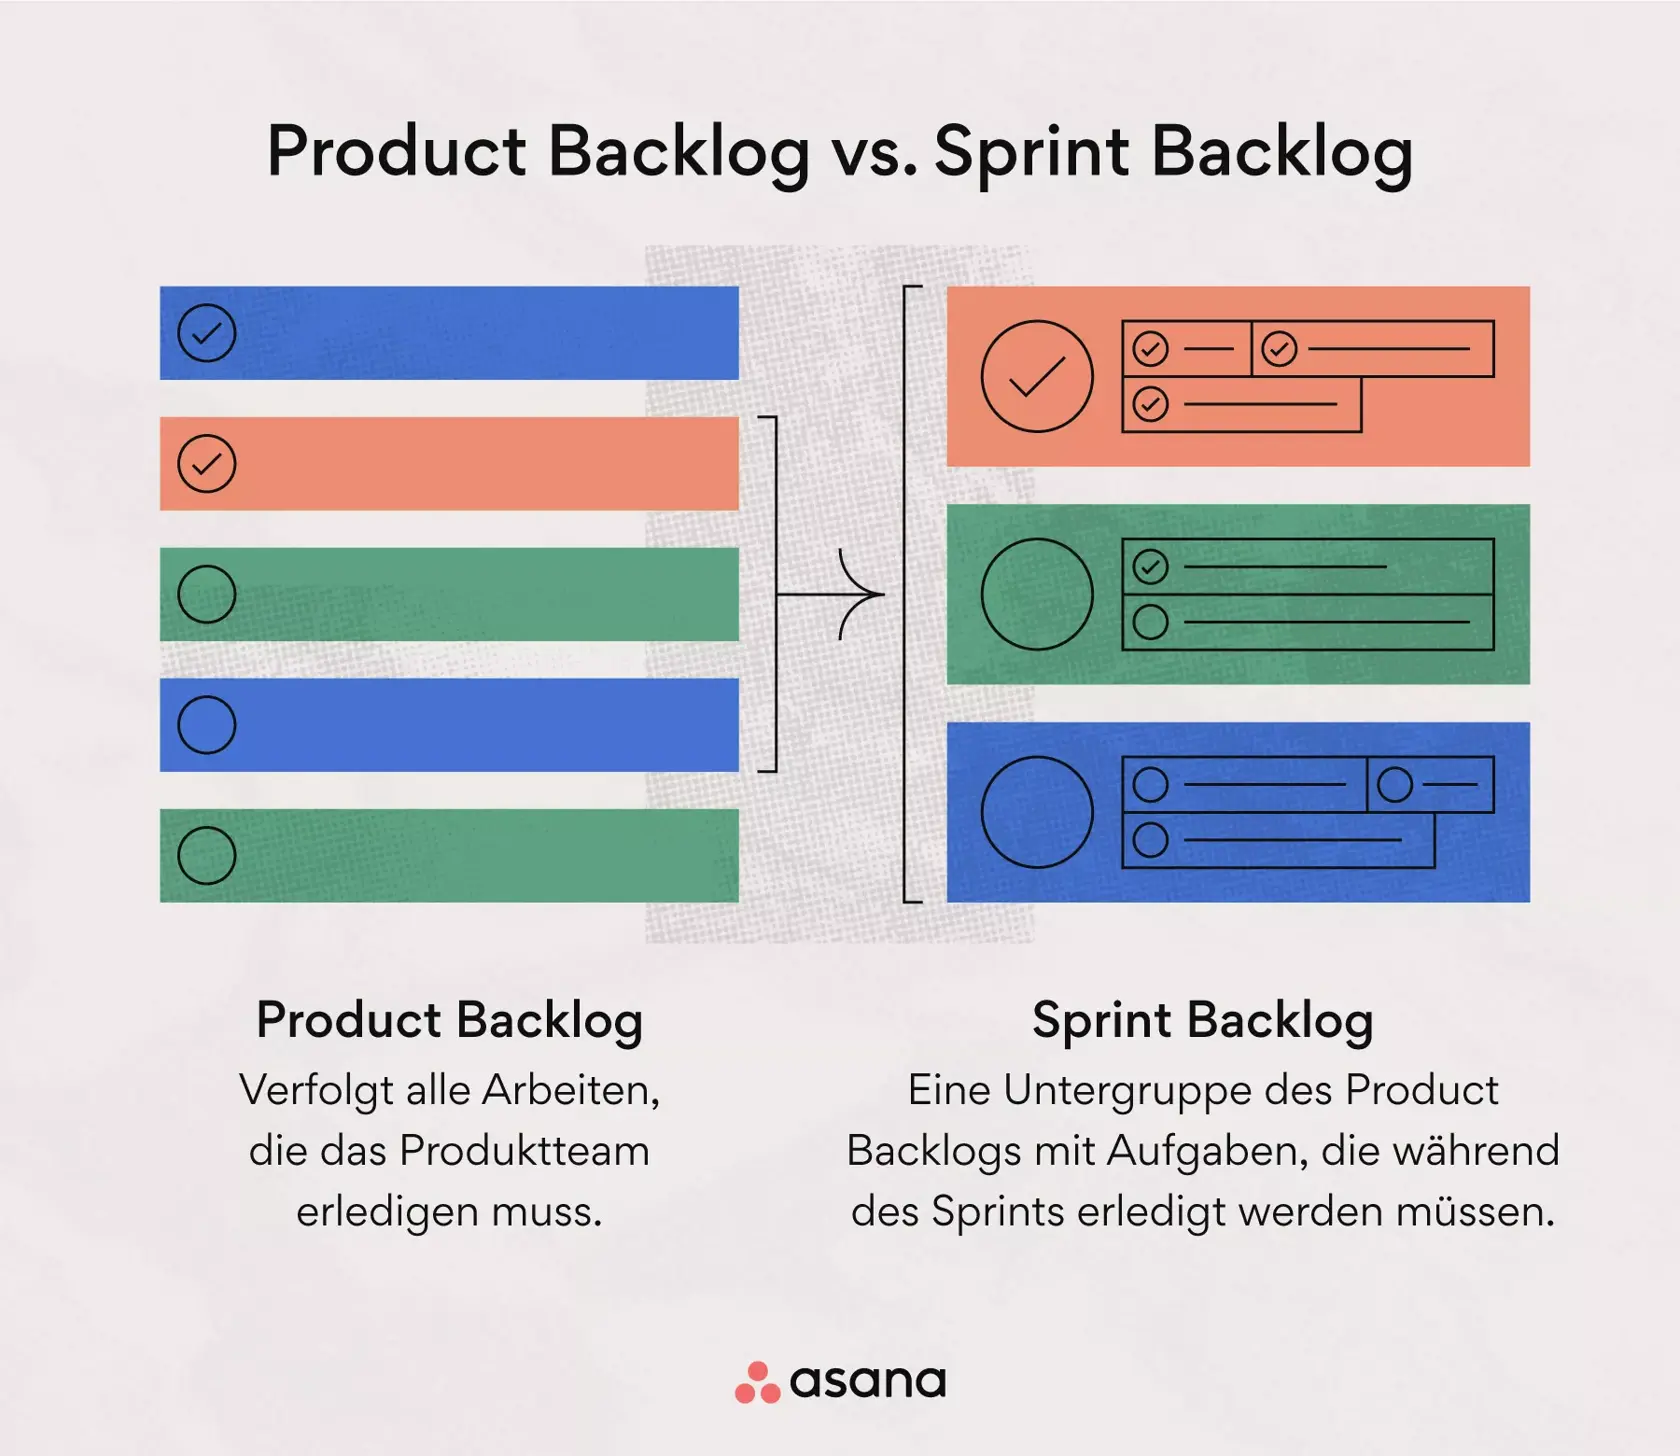 Product Backlog vs. Sprint Backlog